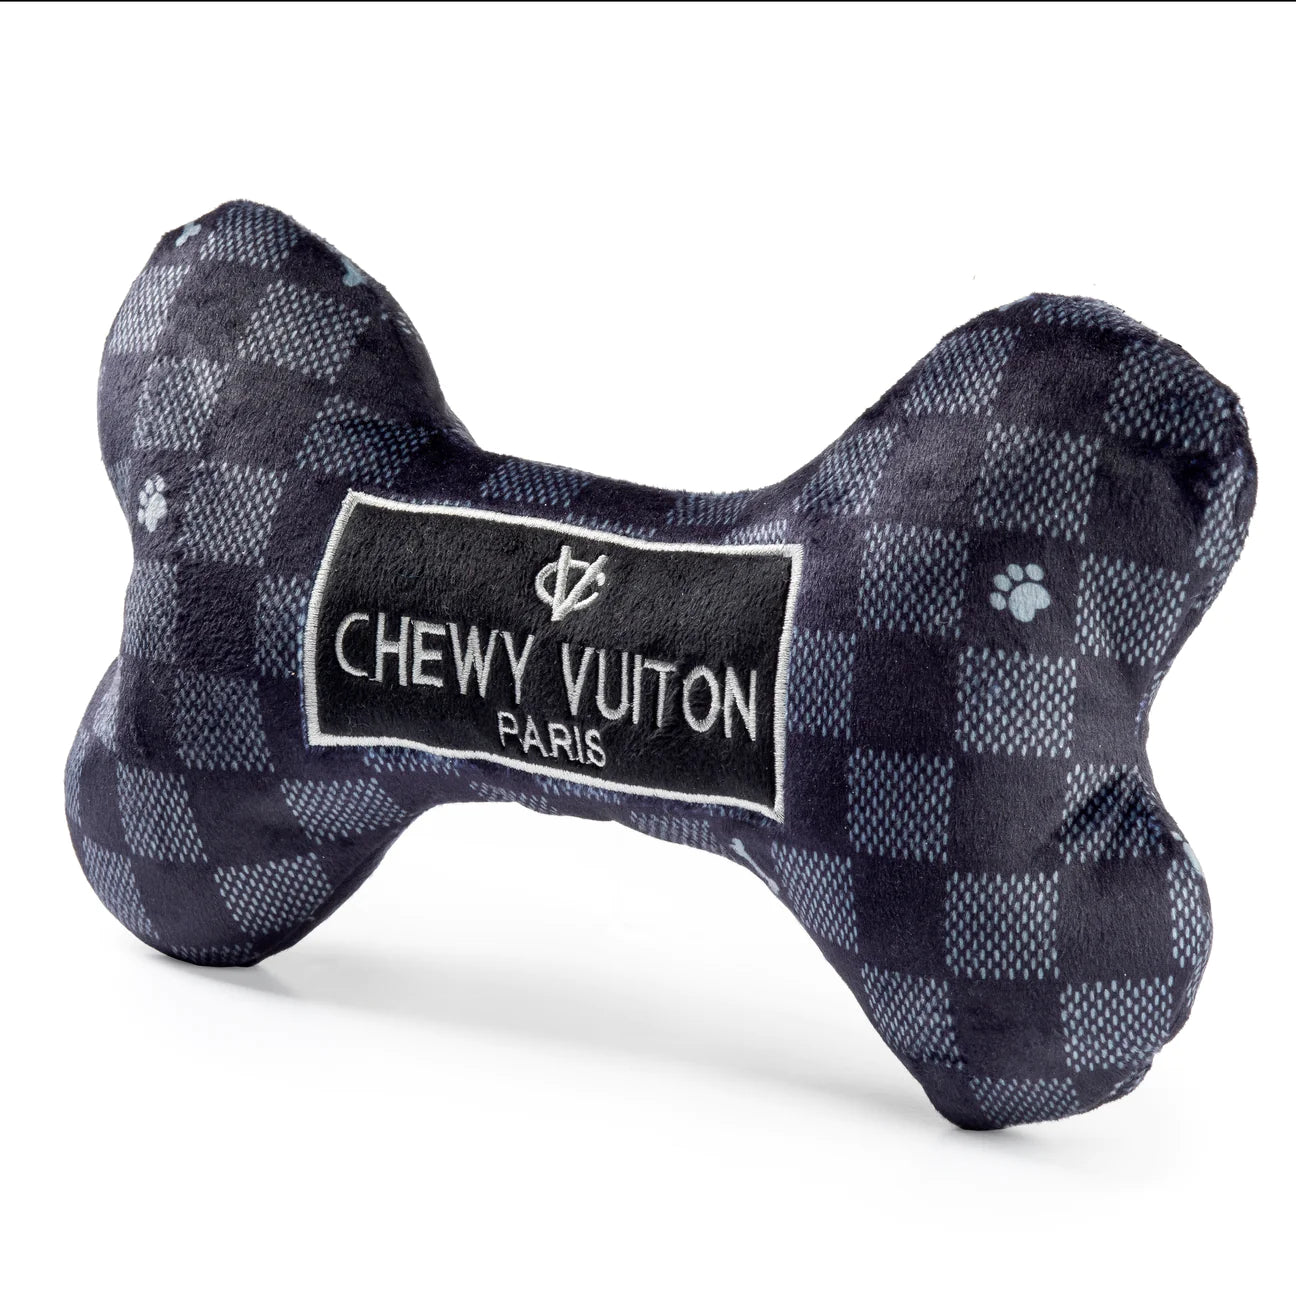 Chewy Vuiton Sort Bone Med Squeaker hundelegetøj